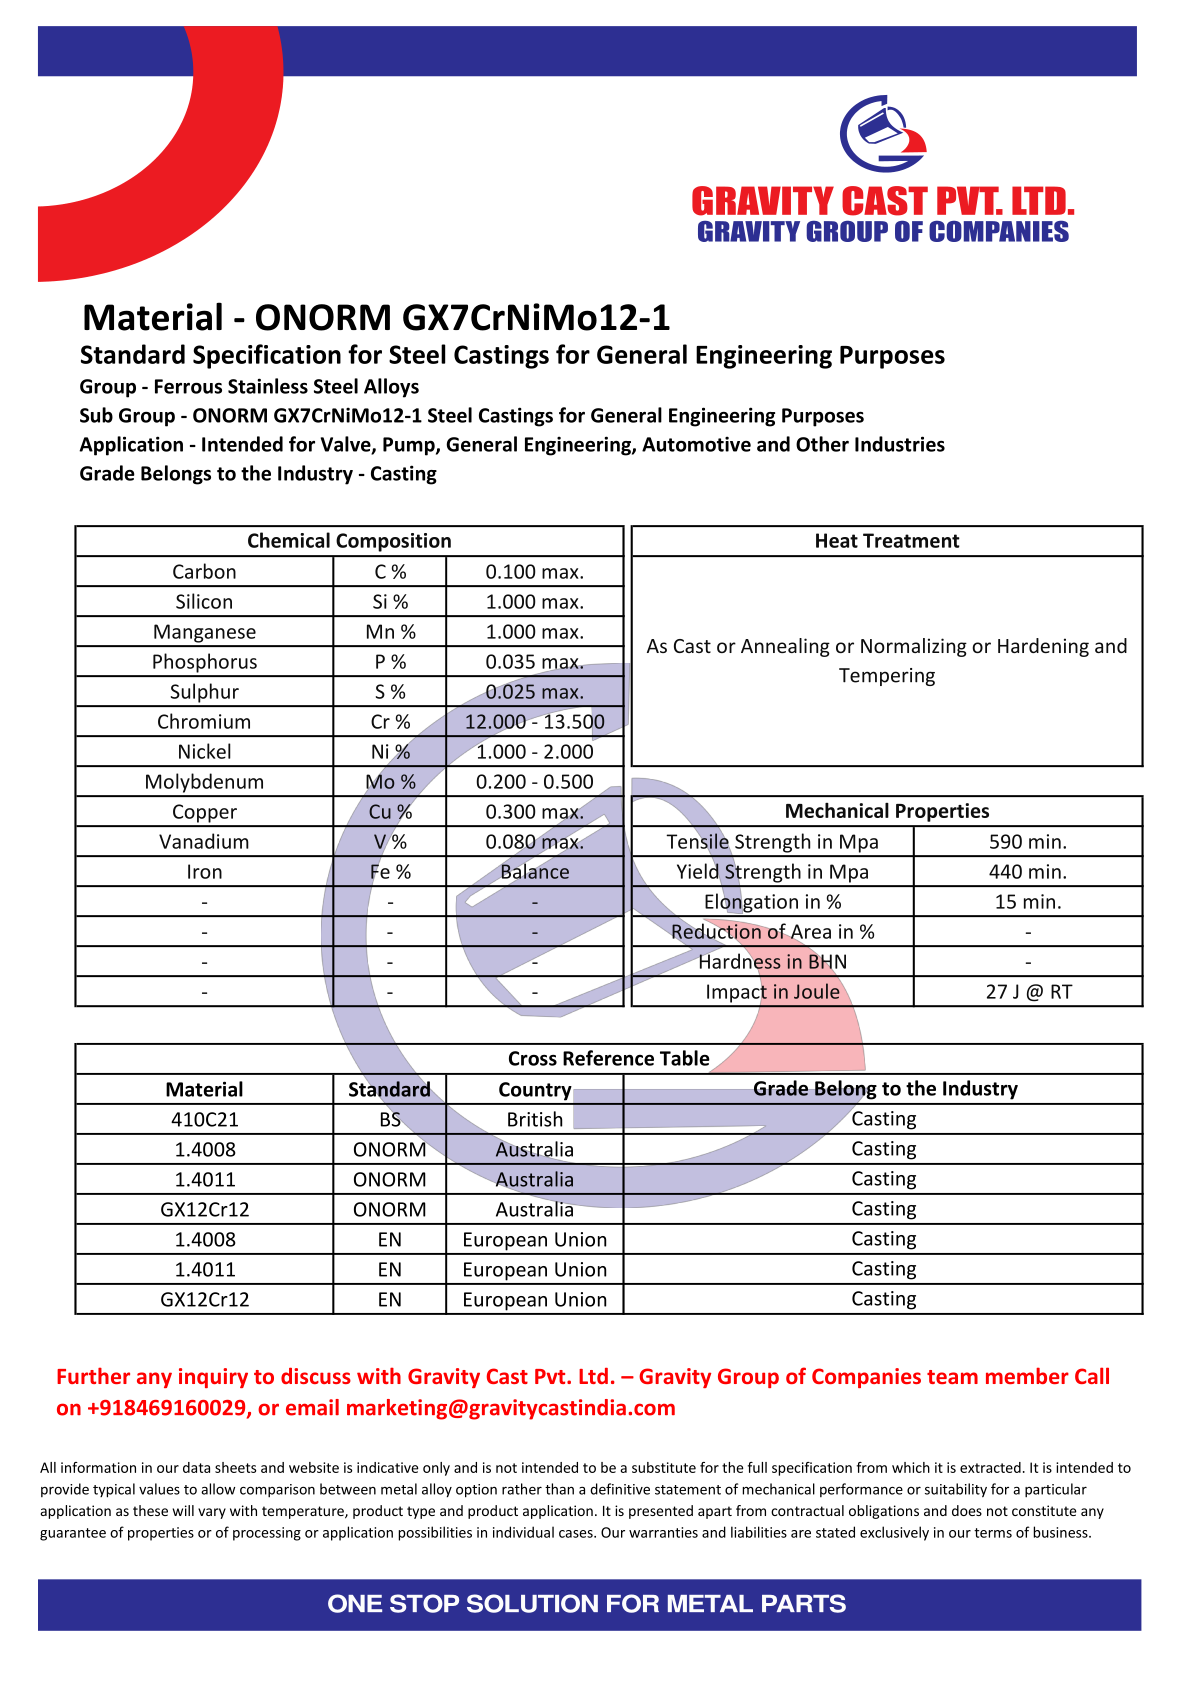 ONORM GX7CrNiMo12-1.pdf